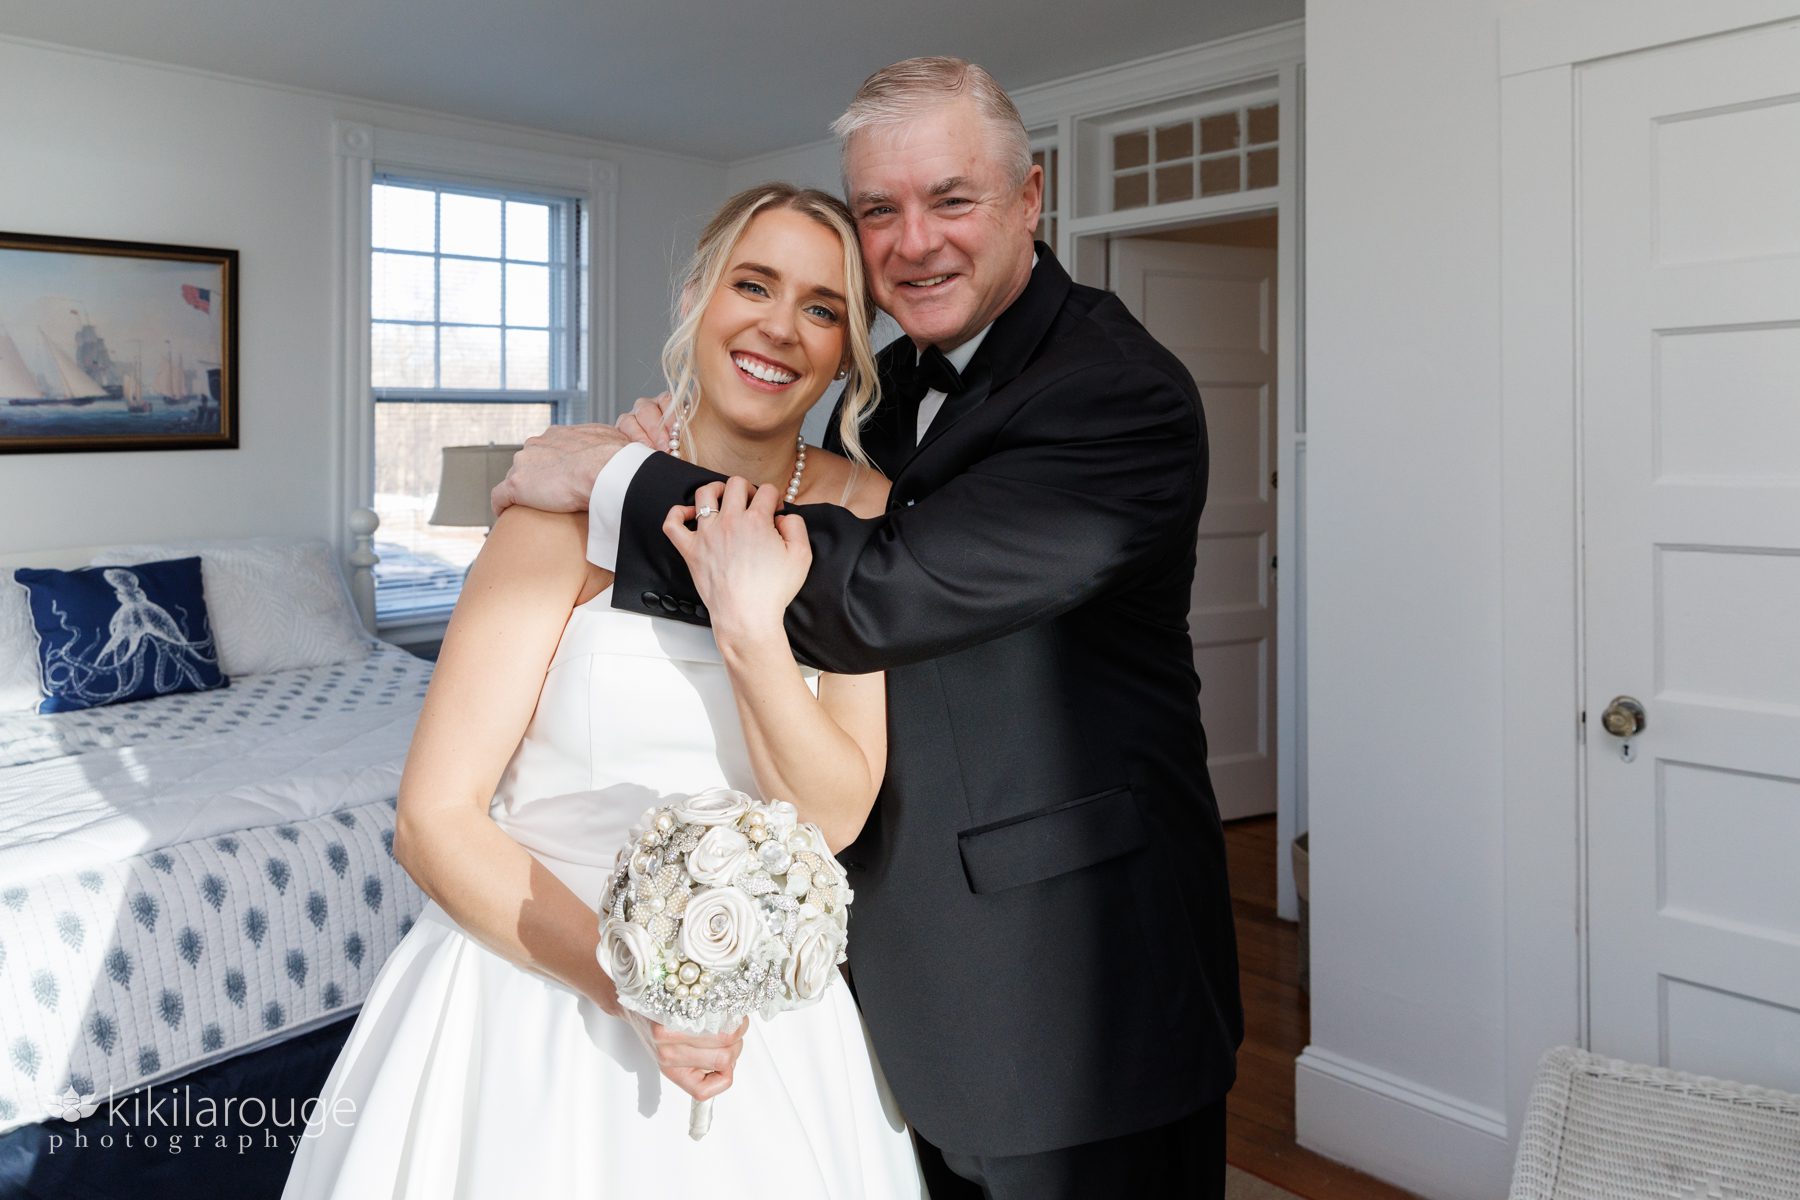 Dad hugging daughter in wedding gown